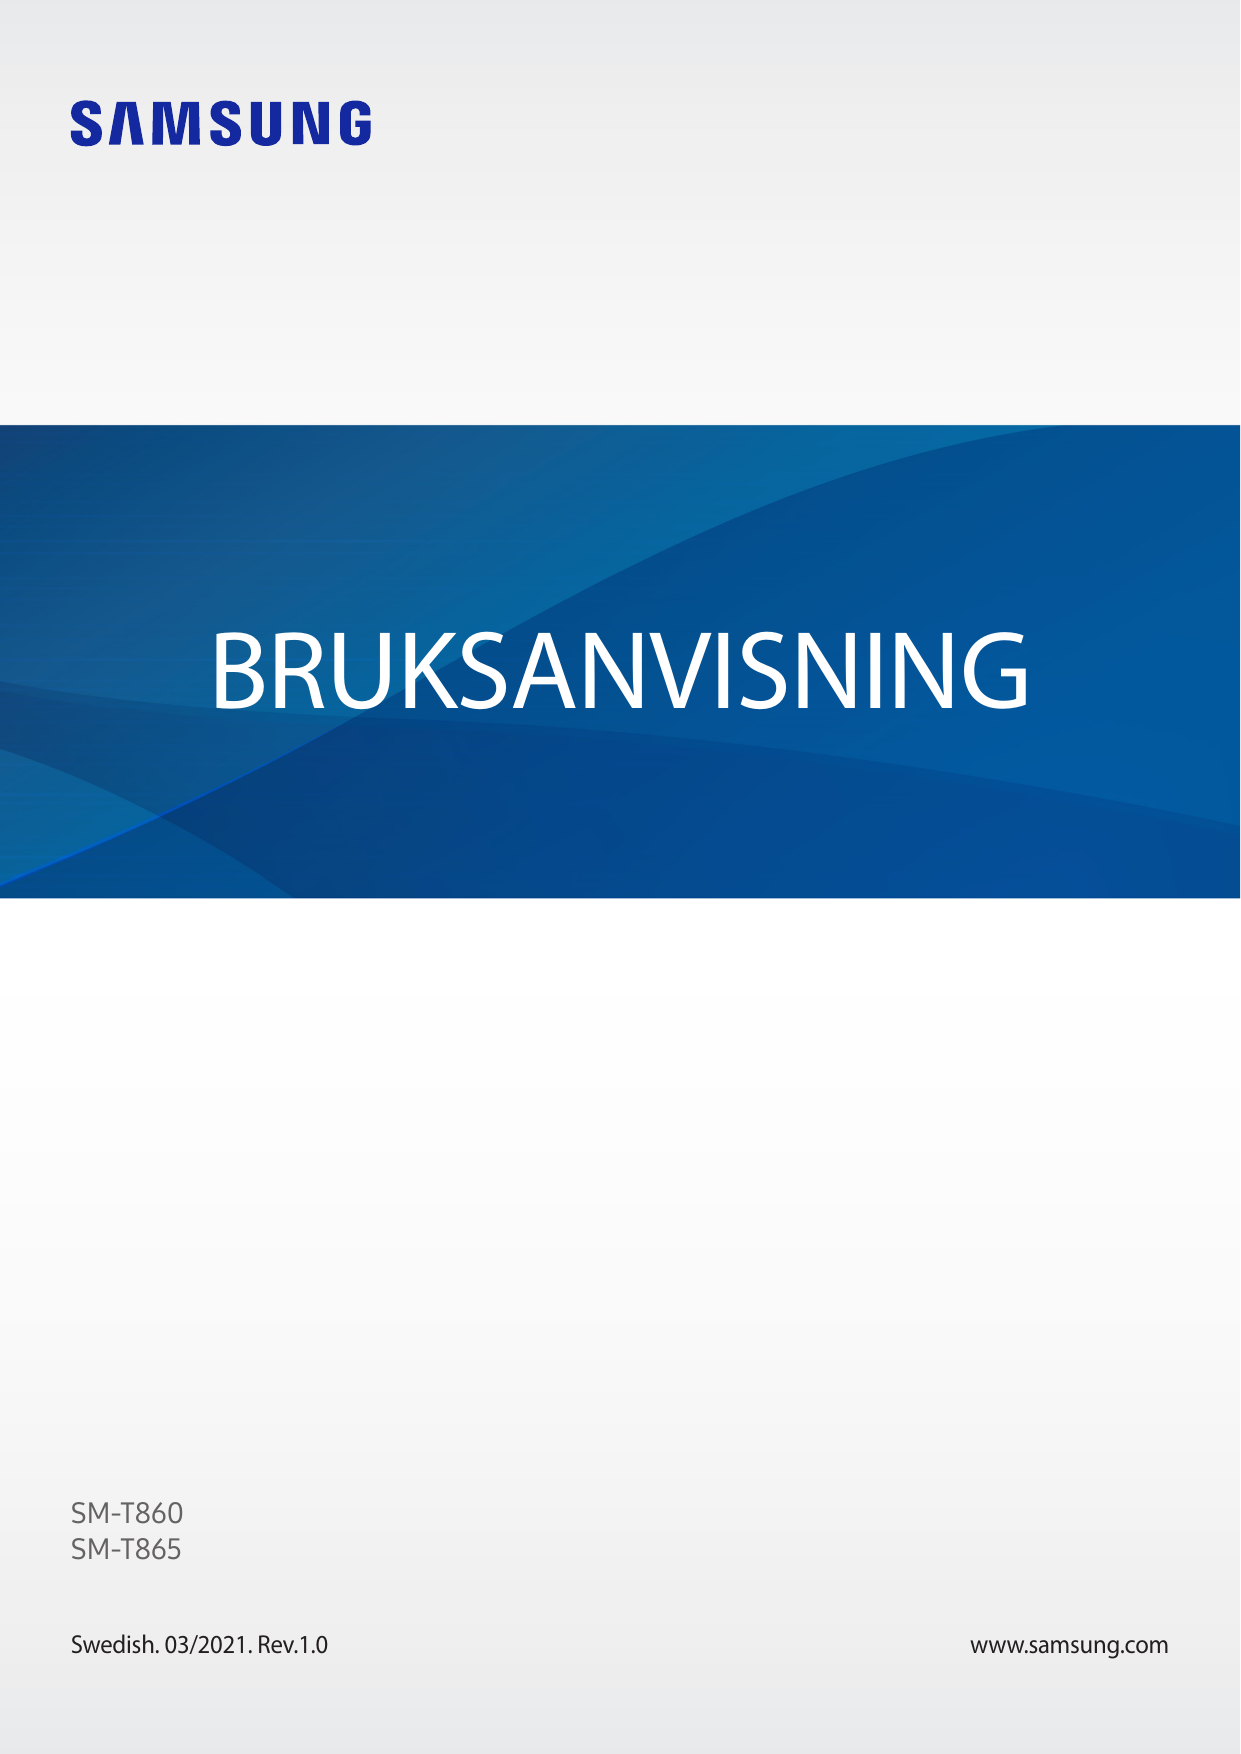 BRUKSANVISNINGSM-T860SM-T865Swedish. 03/2021. Rev.1.0www.samsung.com